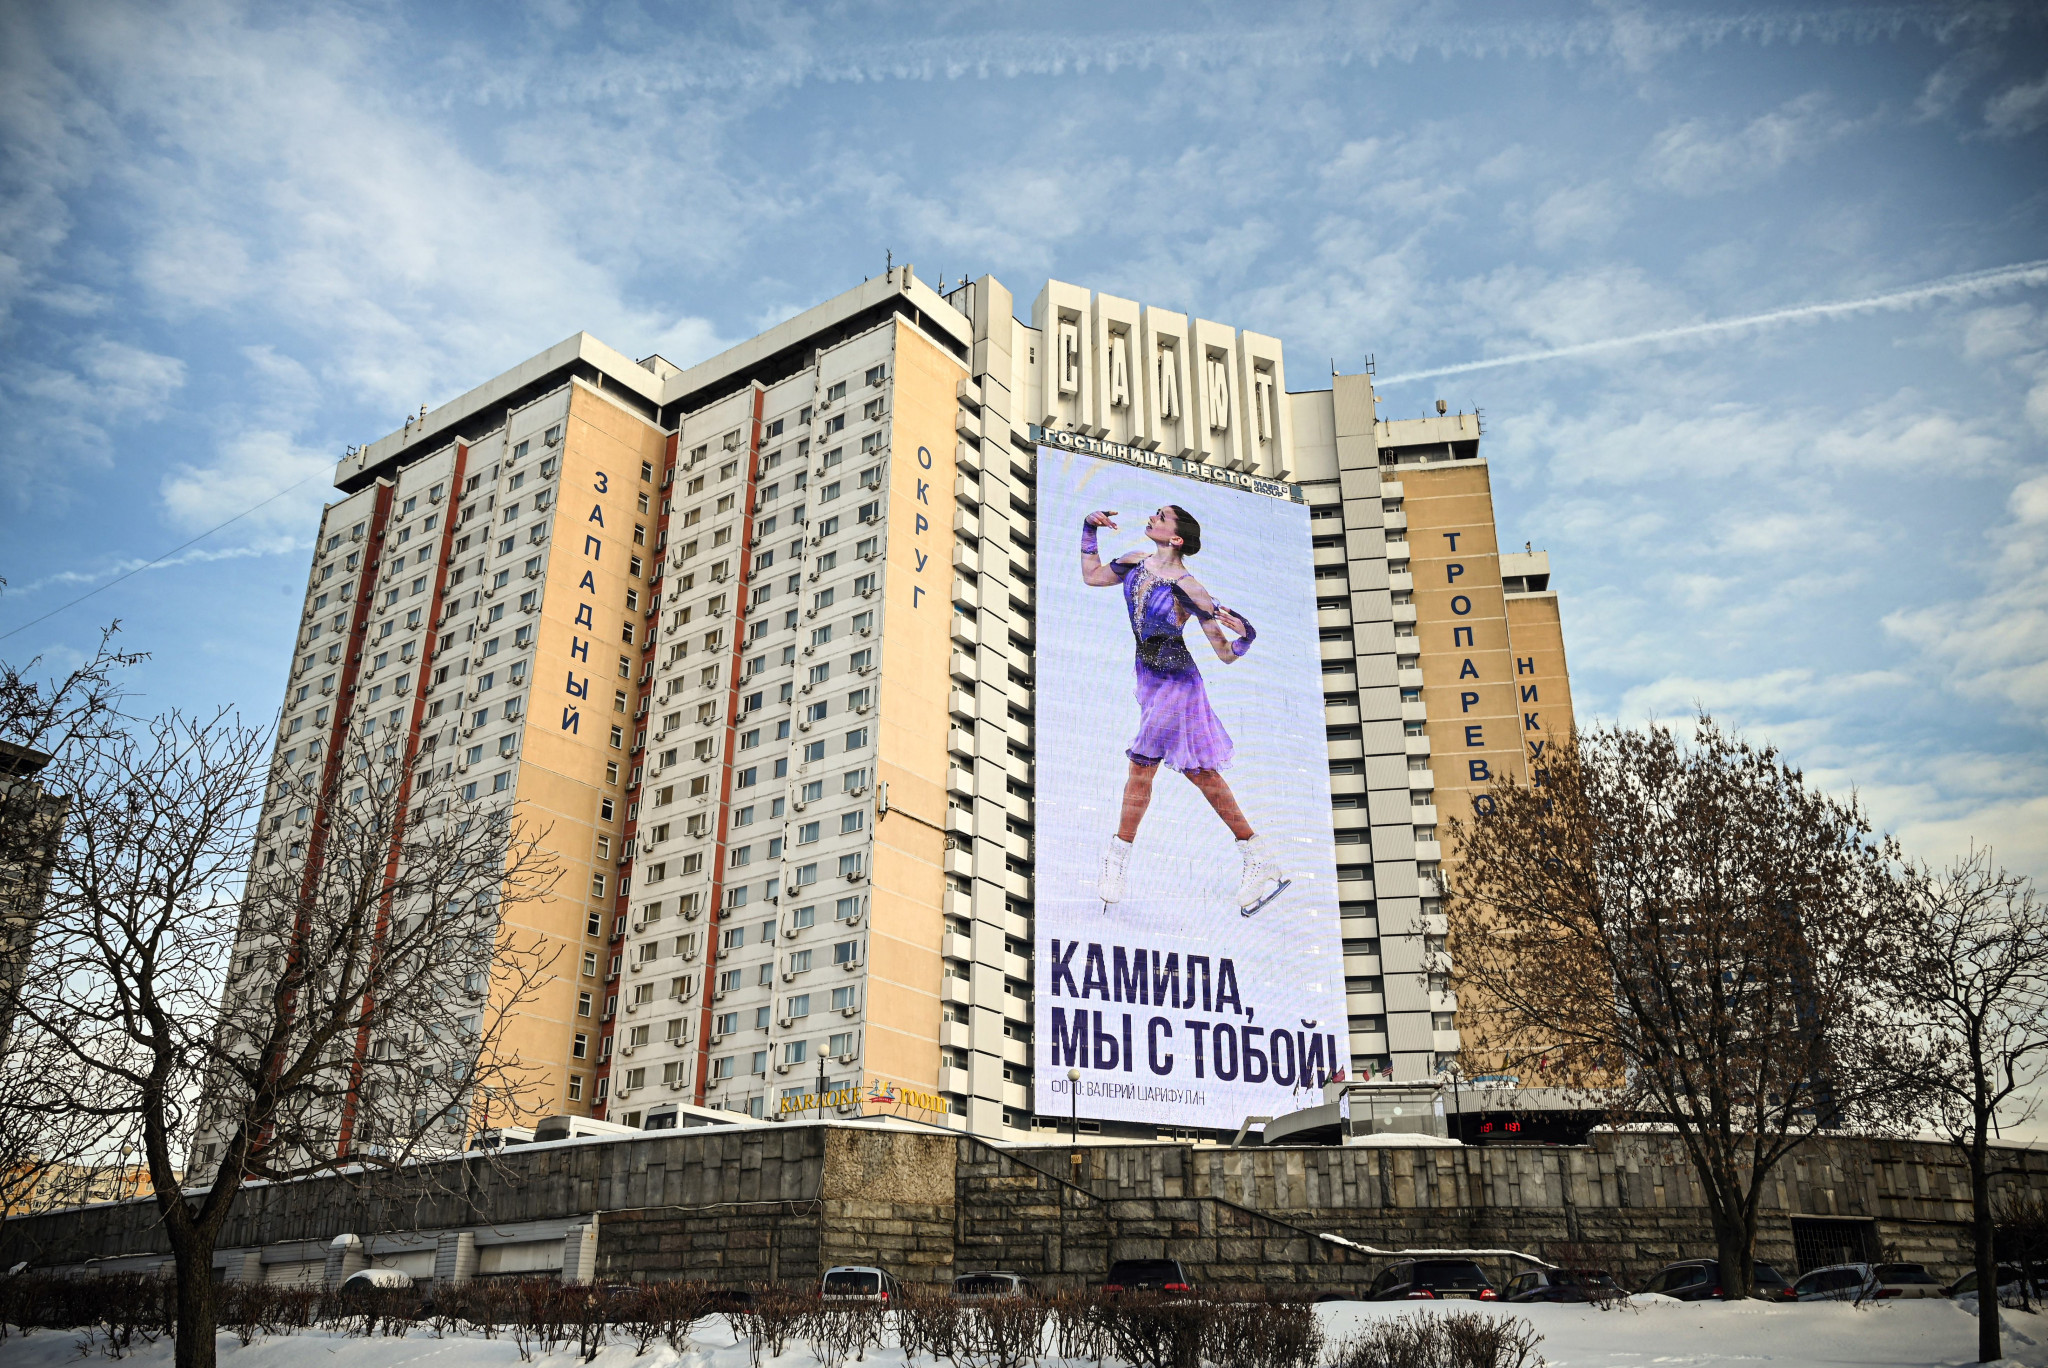 A huge billboard of Kamila Valieva reading 